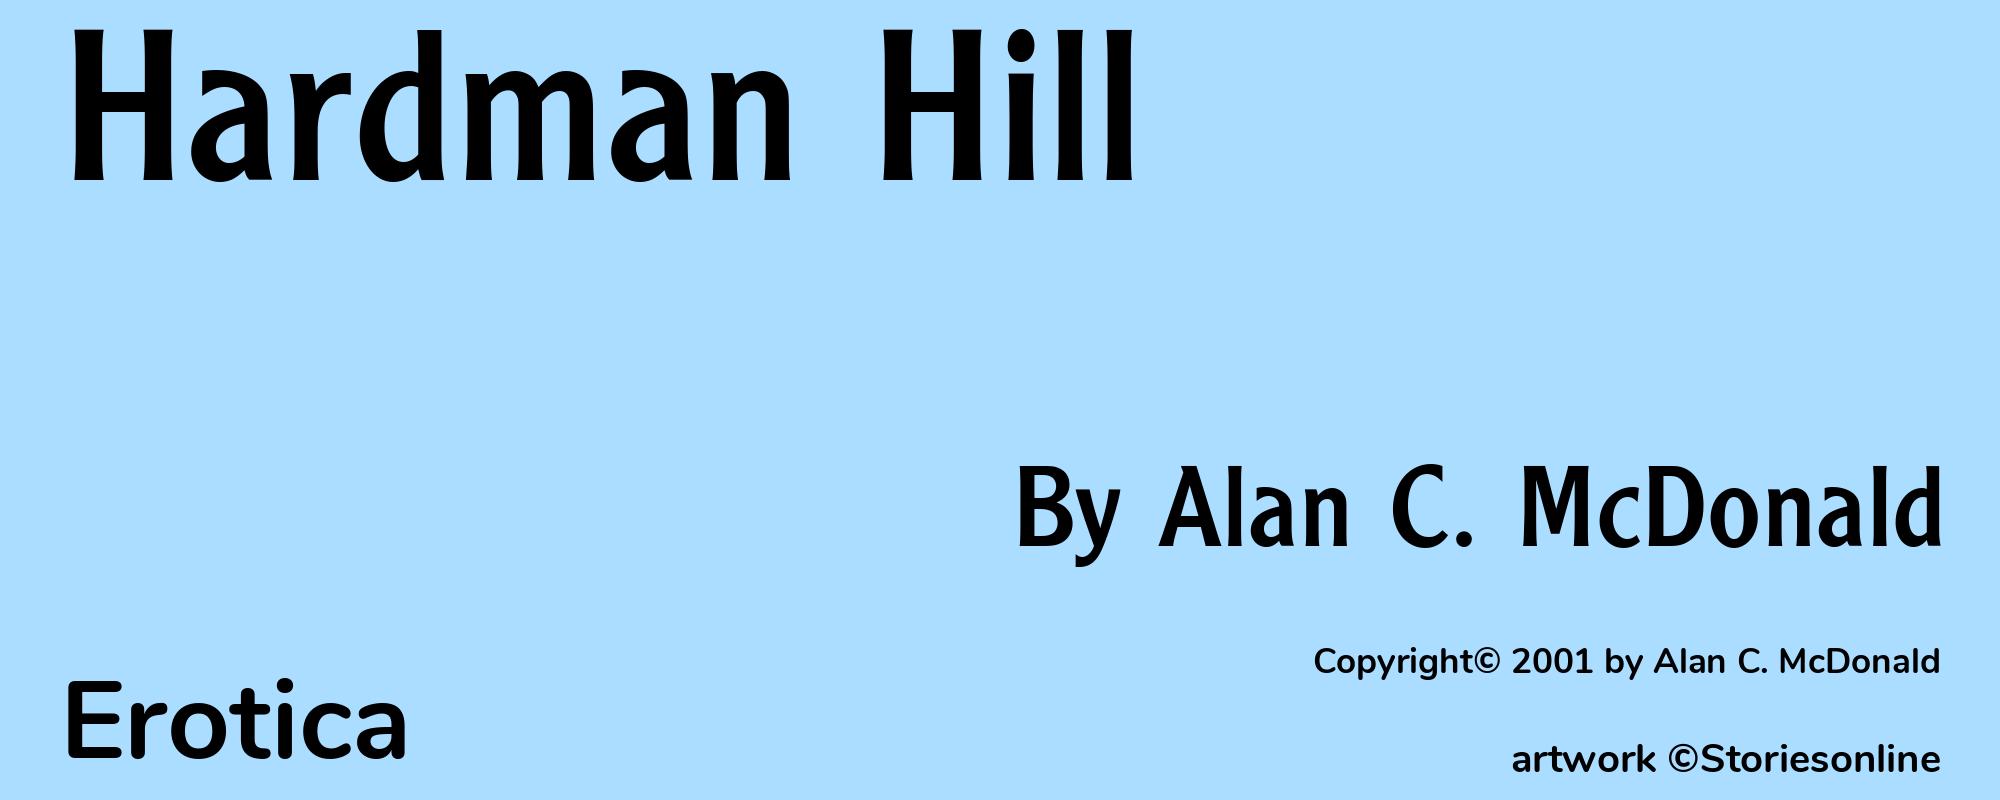 Hardman Hill - Cover